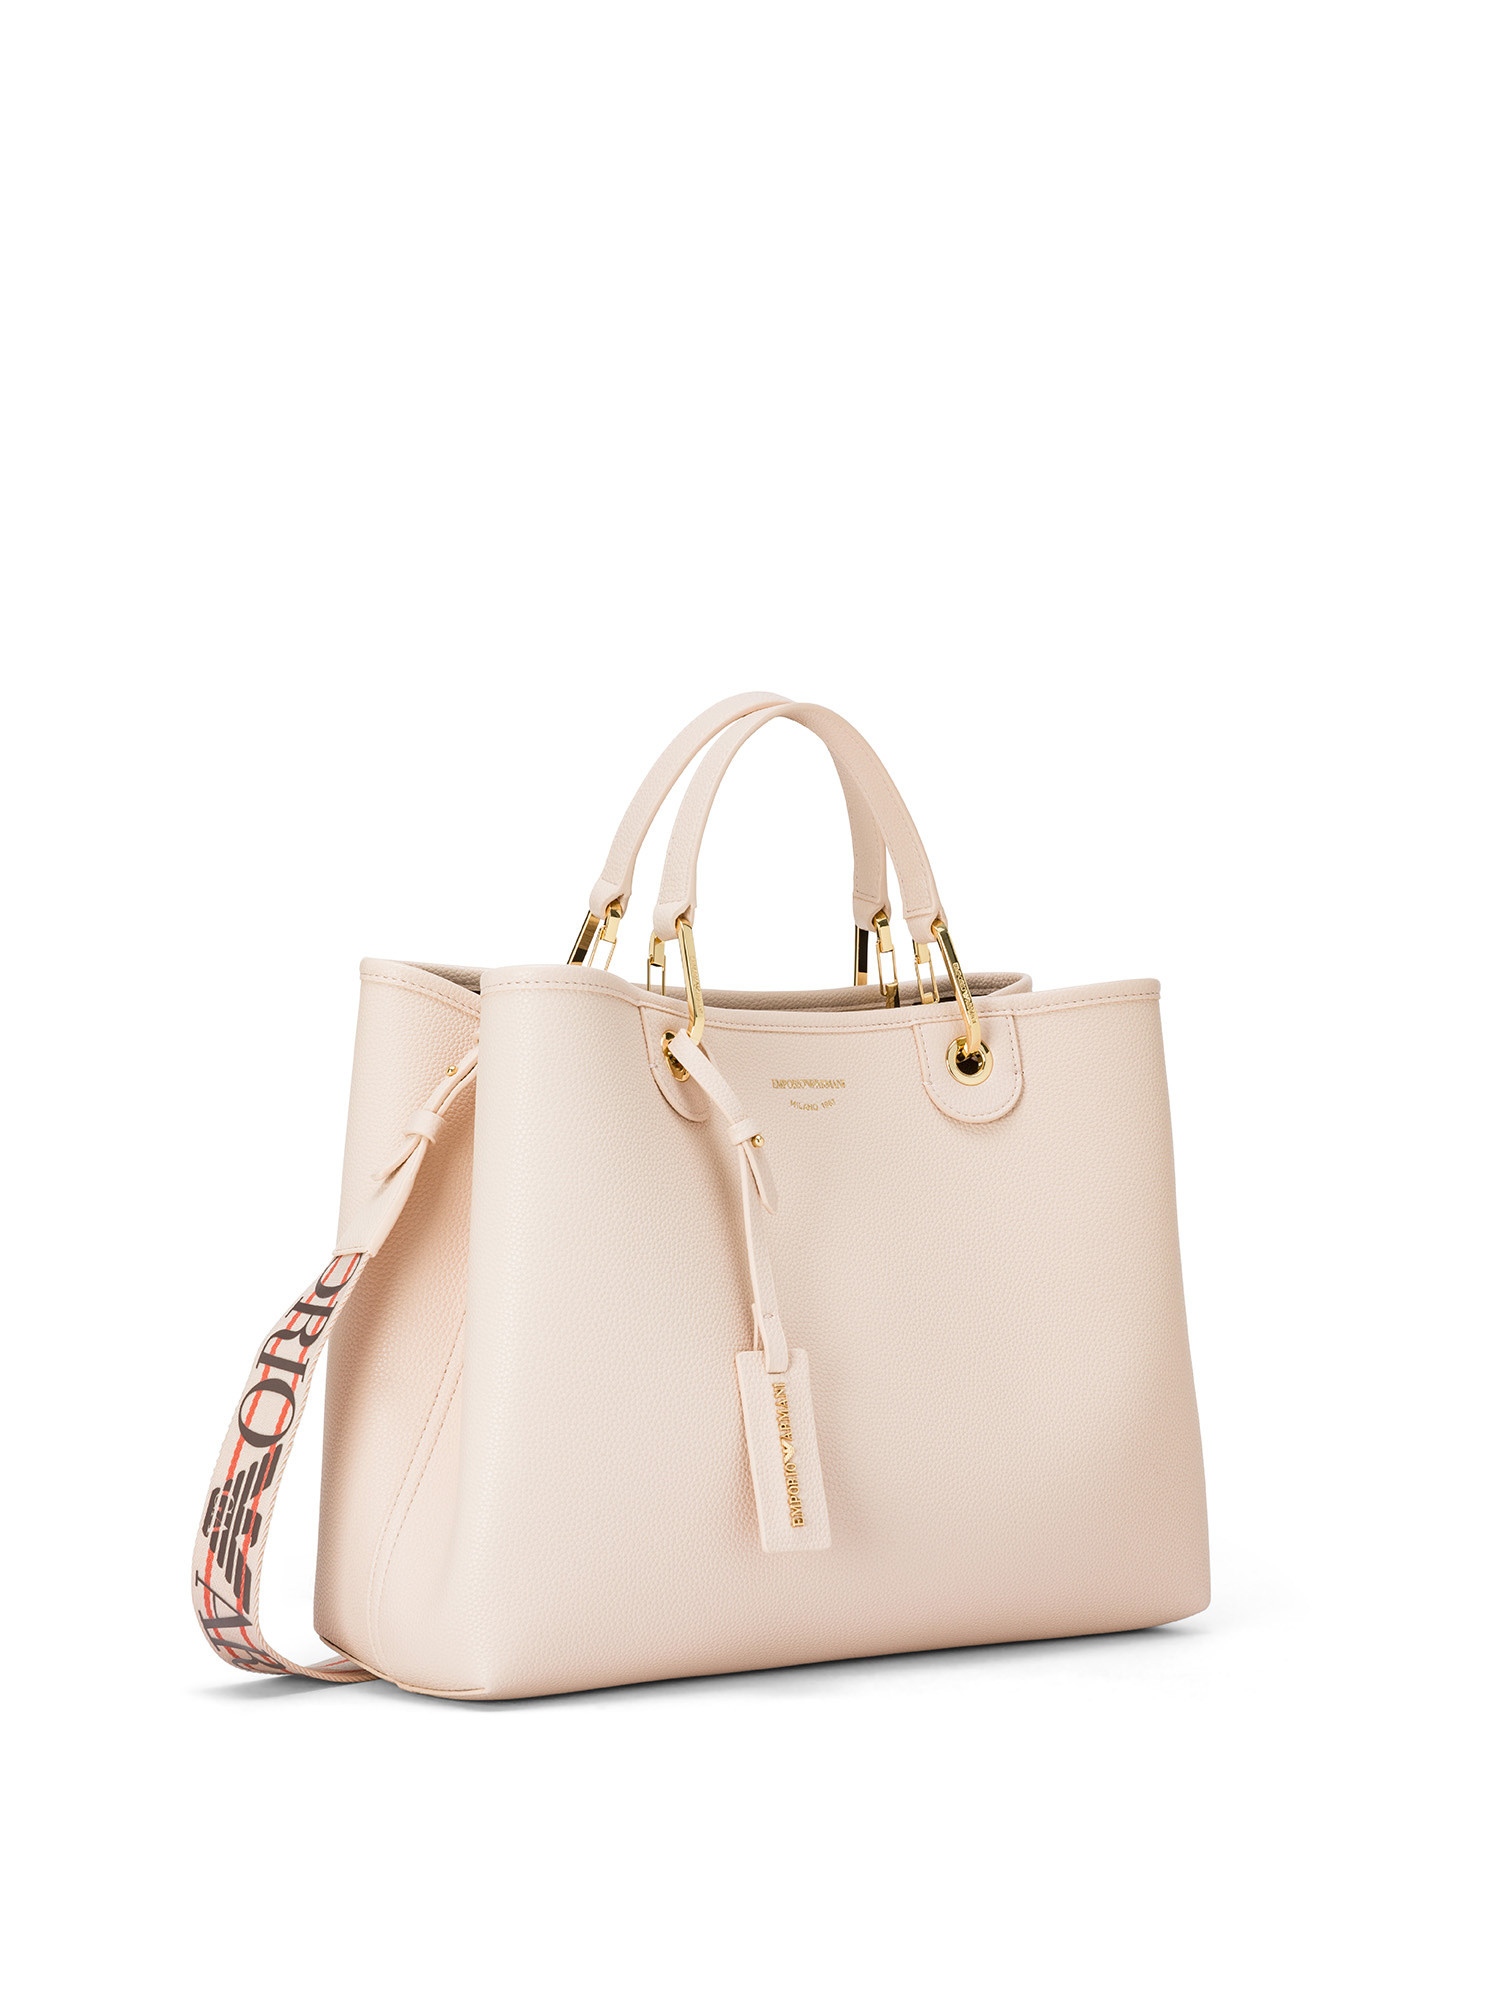 Emporio Armani - Deer print medium handbag, Powder Pink, large image number 1